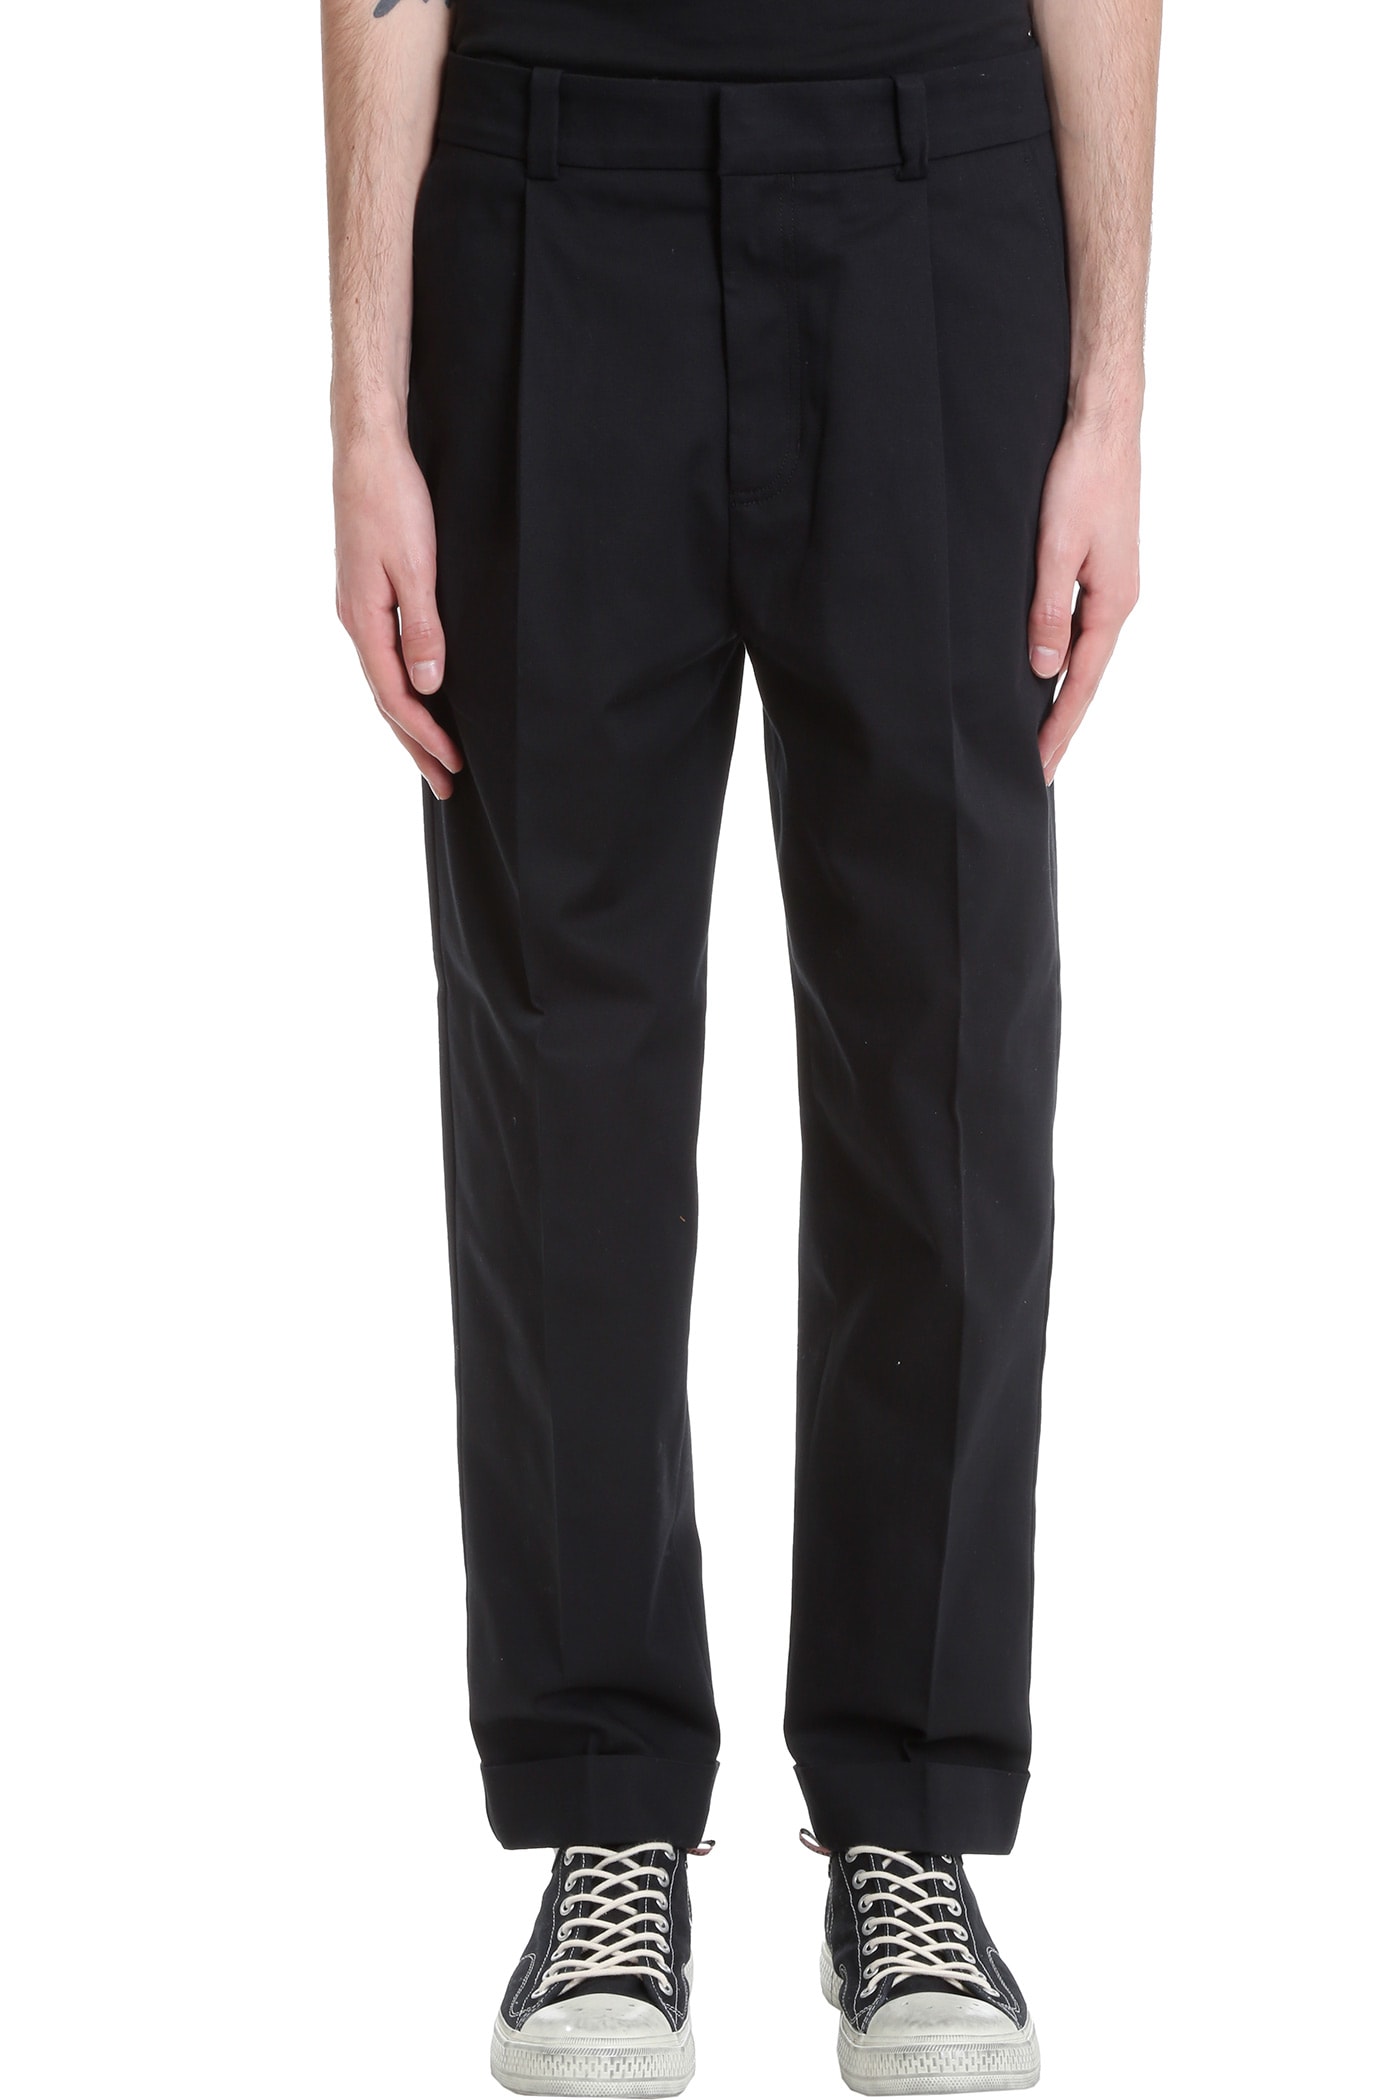 ACNE STUDIOS PIERRE STRUC trousers IN BLACK COTTON,BK0382900